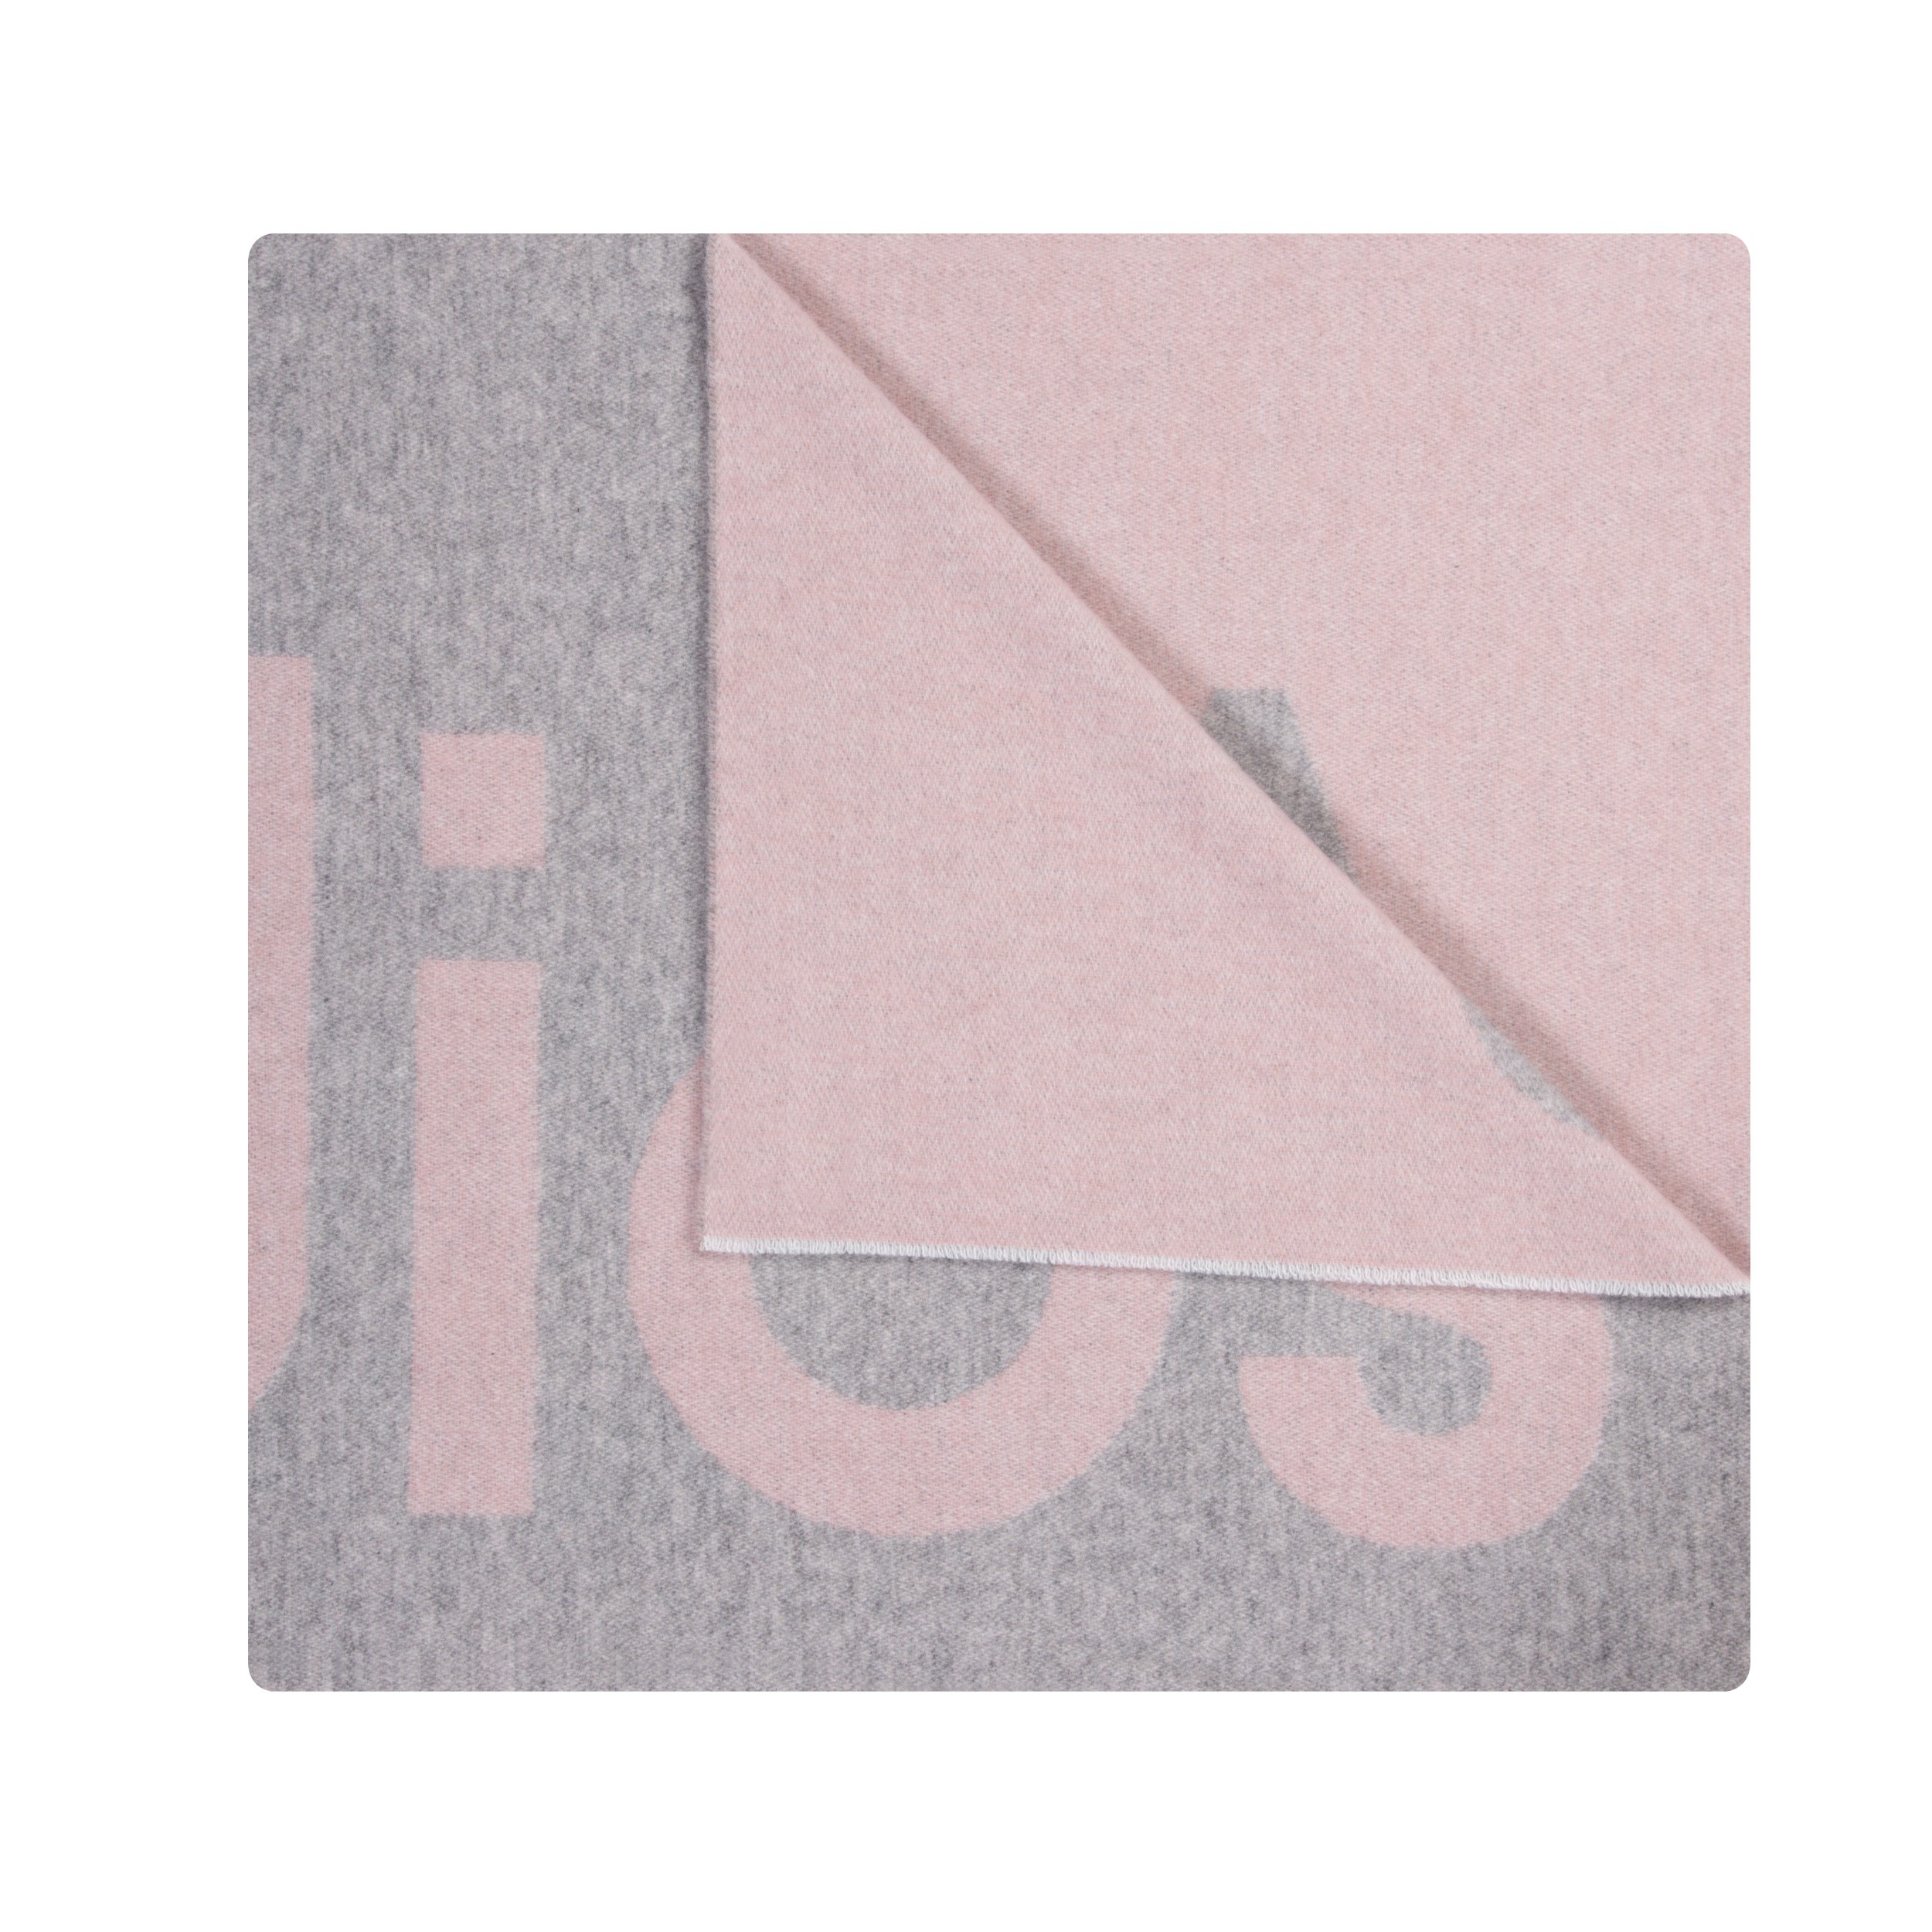 Acne Studios 'Jacquard' Logo Scarf Light Pink/Grey